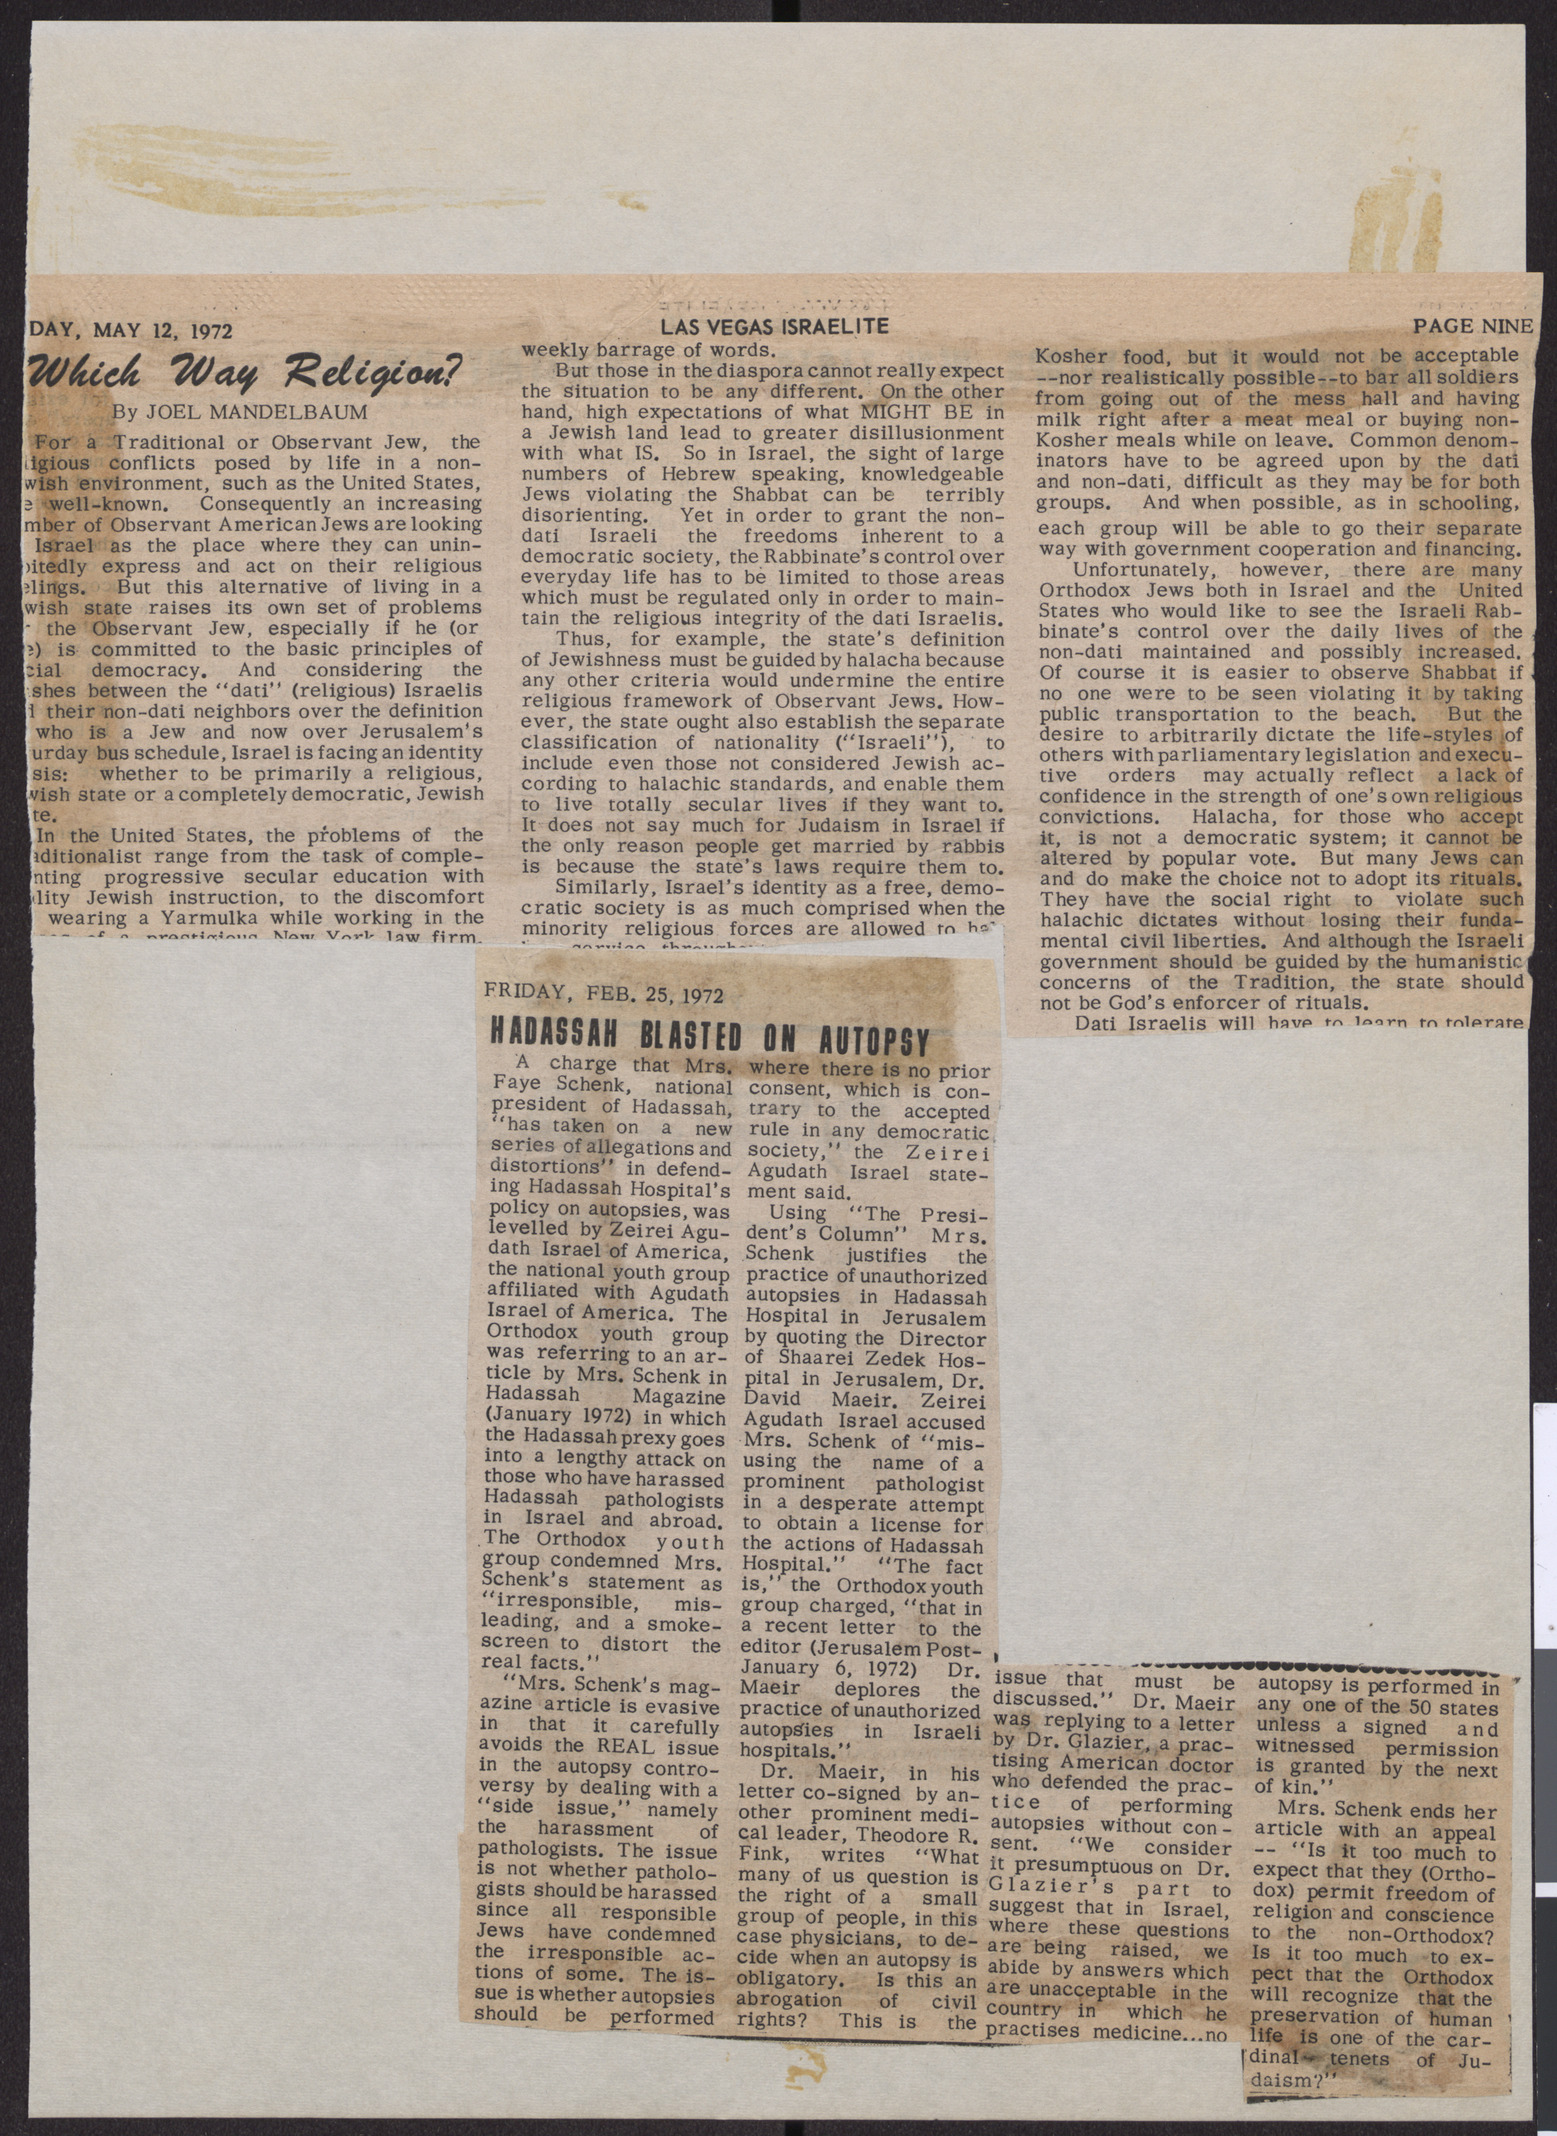 Newspaper clippings, Which Way Religion?, Las Vegas Israelite, May 12, 1972, and Hadassah Blasted on Autopsy, Las Vegas Israelite, February 25, 1972